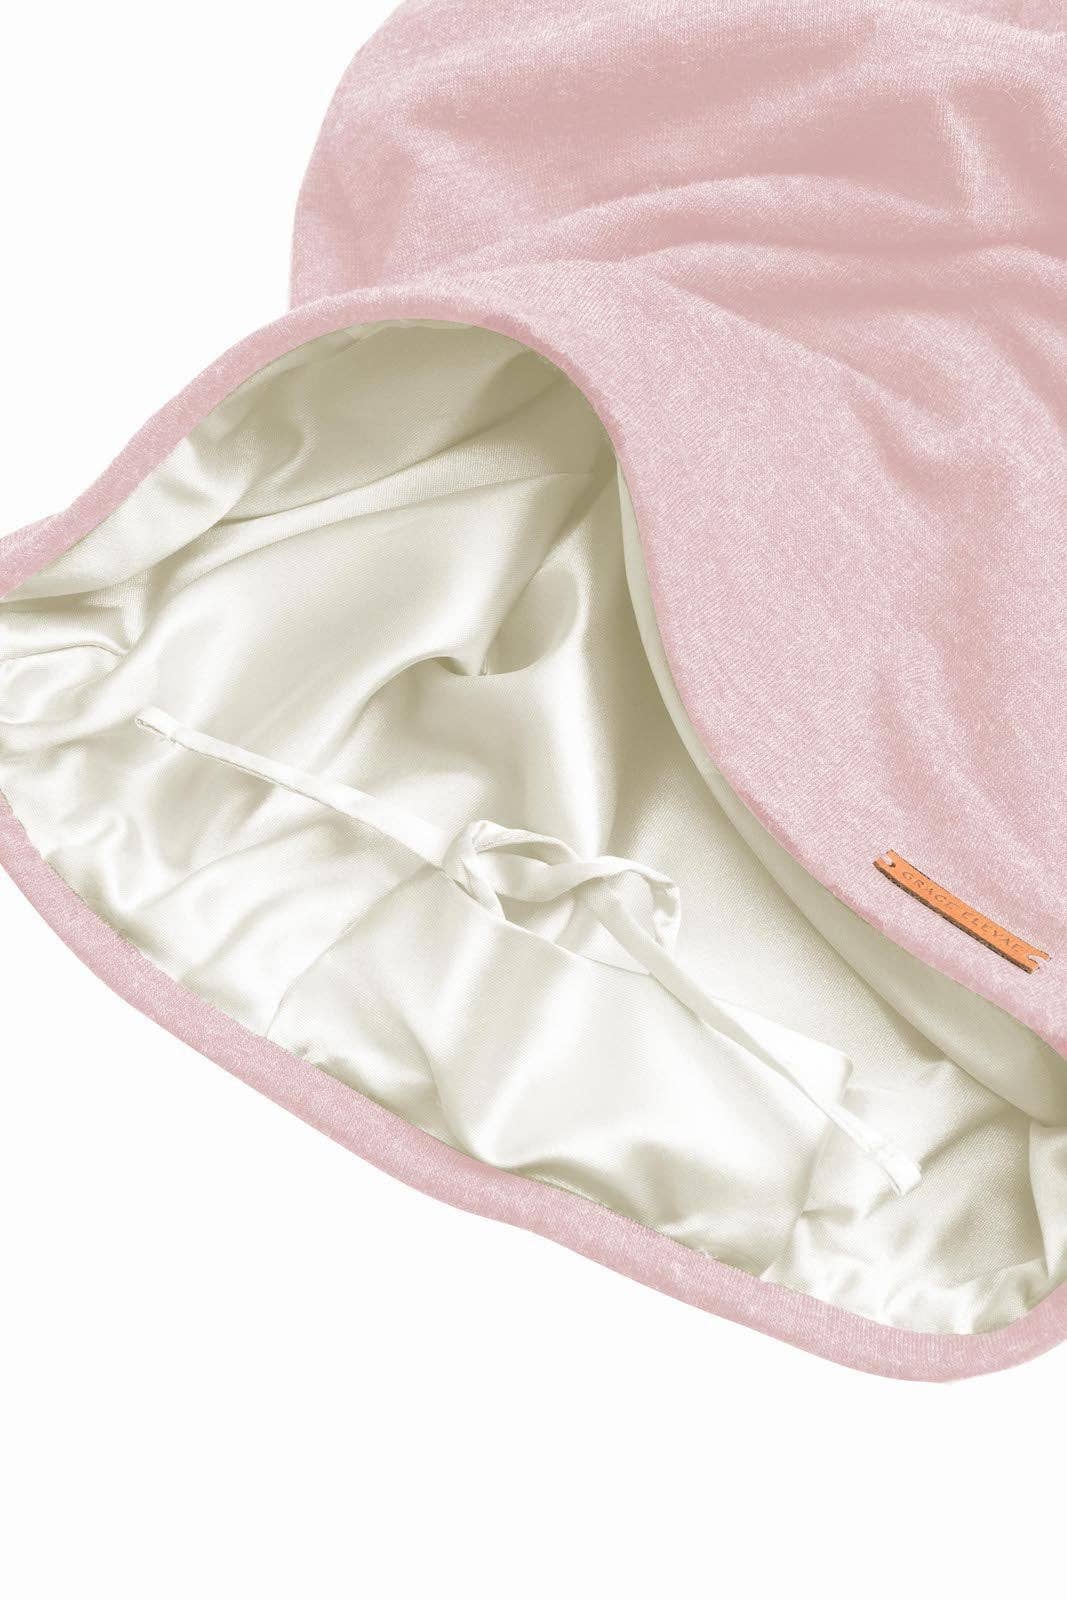 Grace Eleyae Inc. - Pink Adjustable Slap | Satin-Lined Cap: Pink / One Size